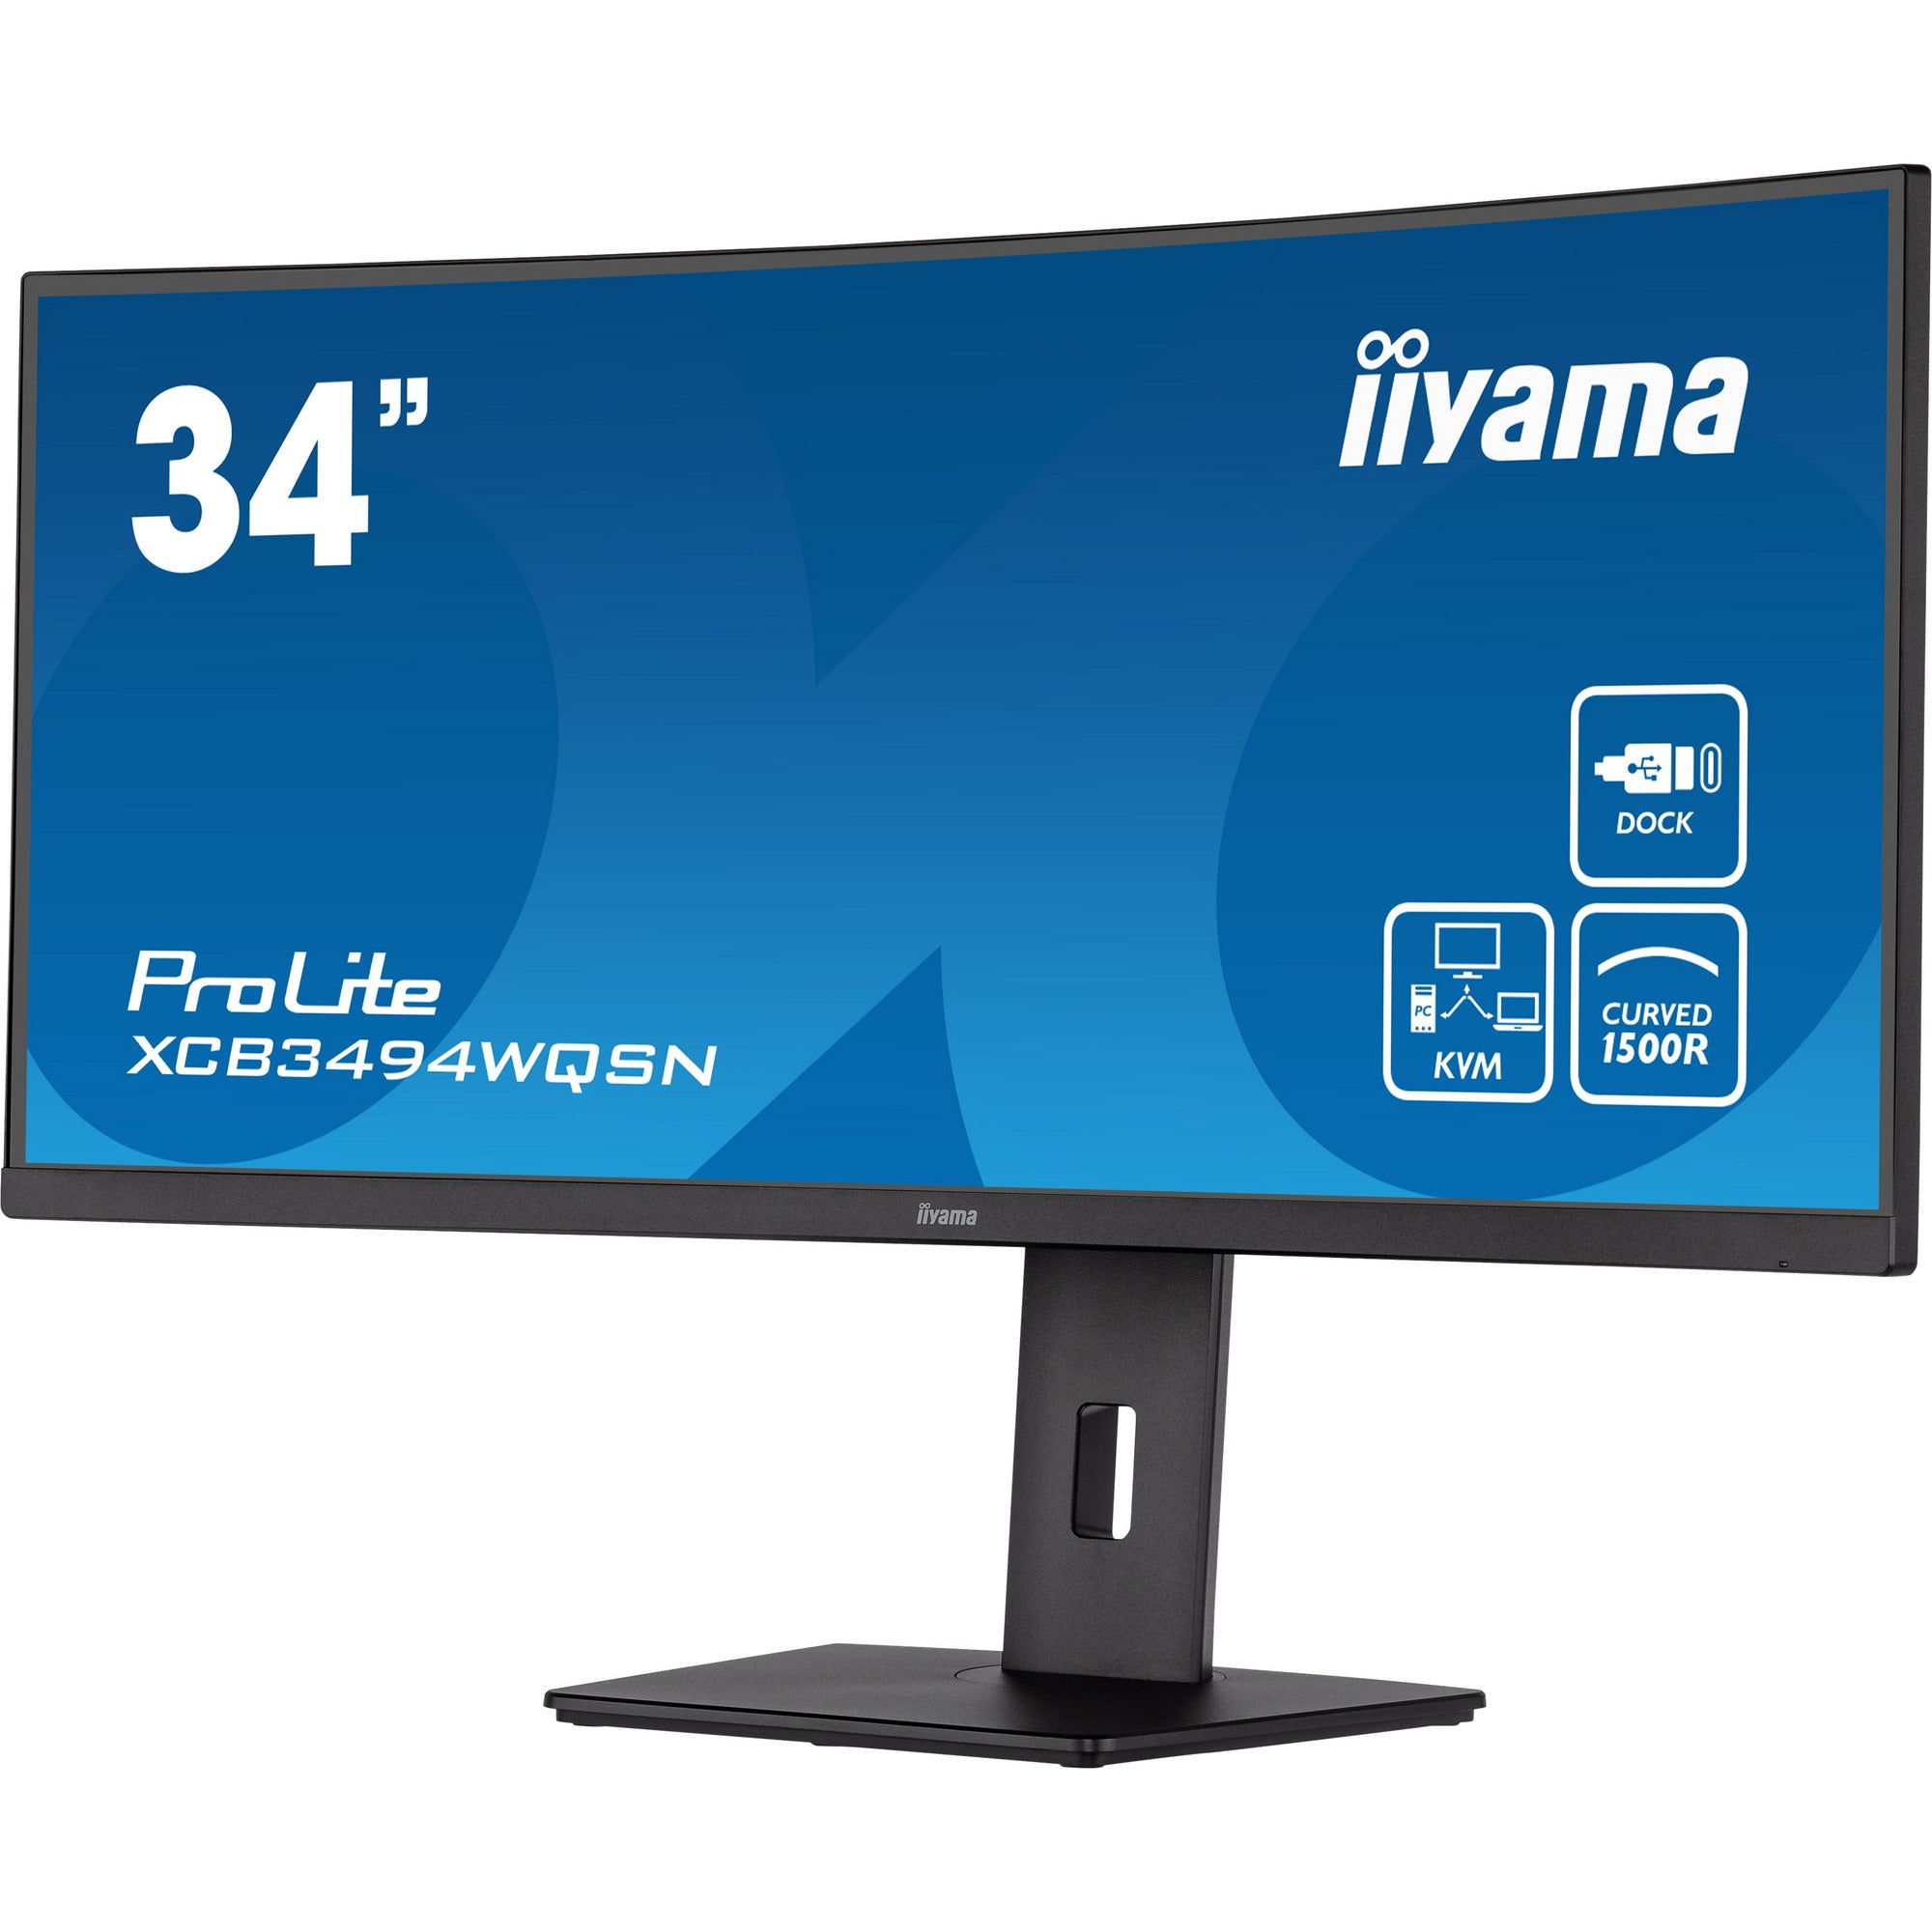 iiyama ProLite XCB3494WQSN-B5 34" 1500R Curved Monitor with USB-C Dock & KVM